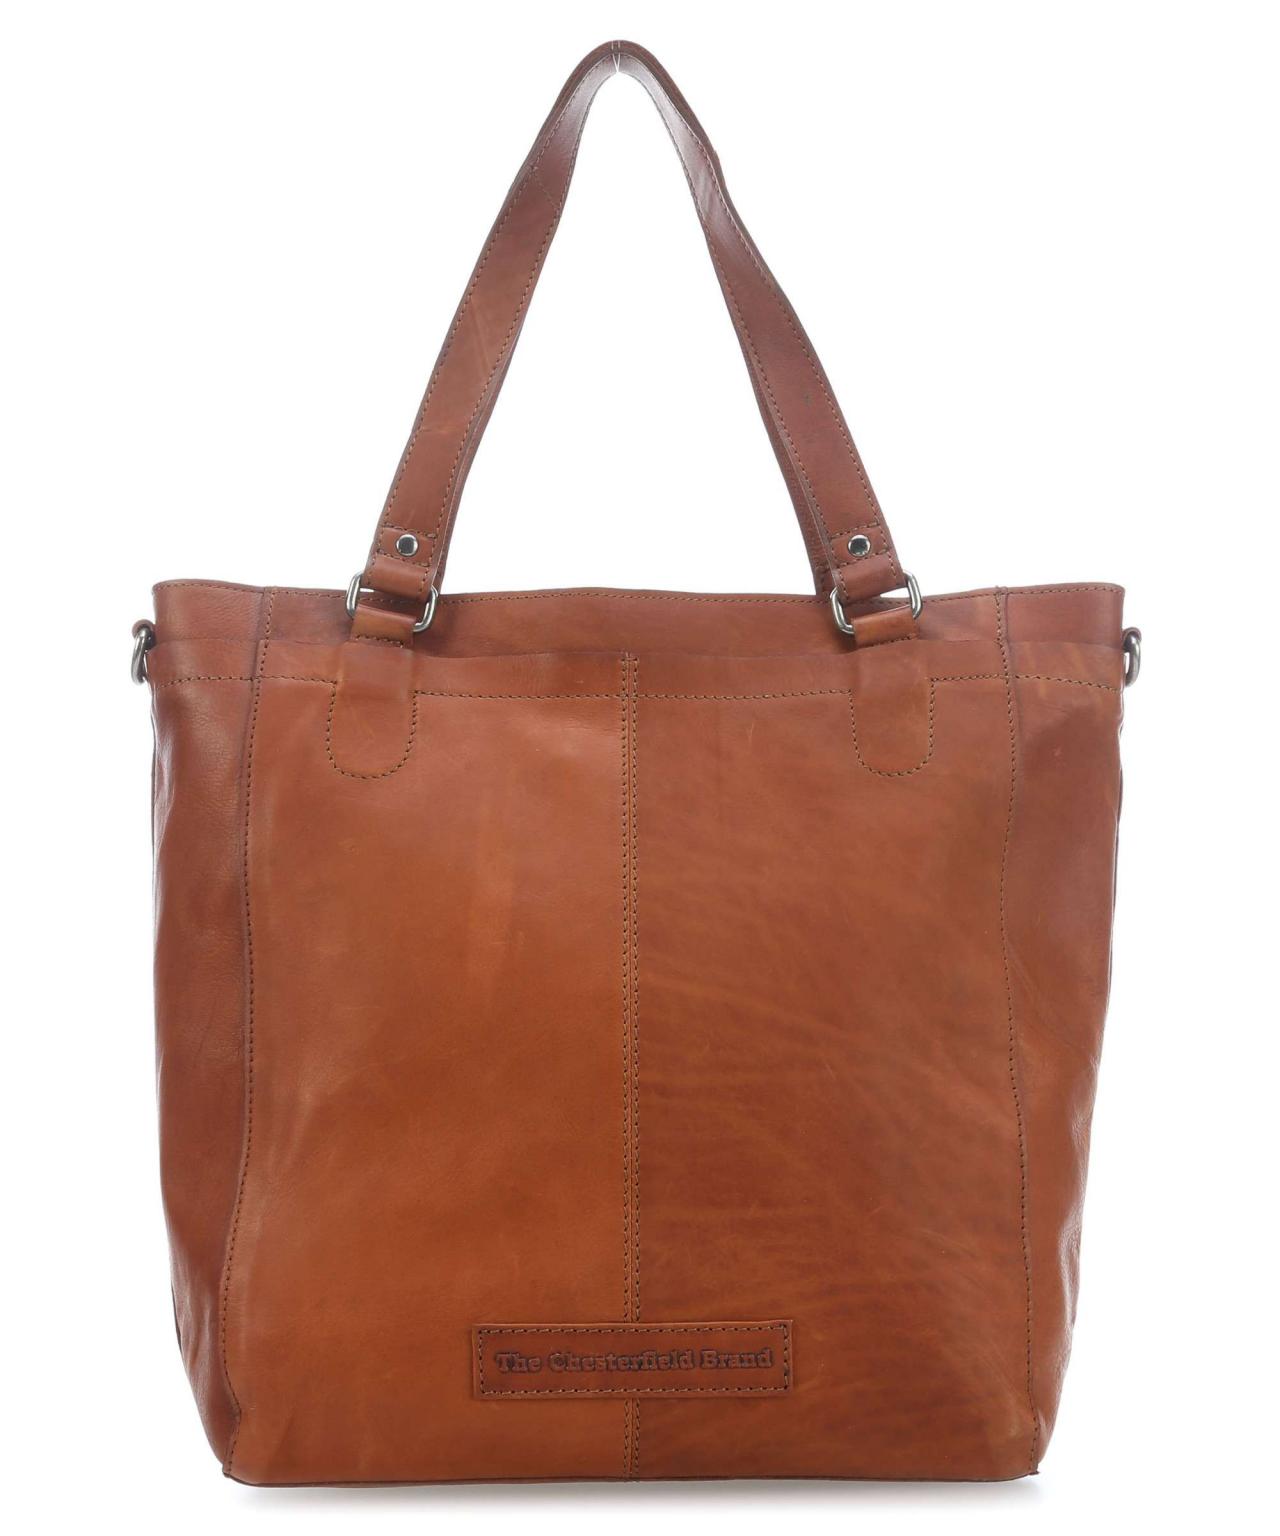 Brown Handbag. Genuine Leather Purse. Brown Leather Handbag. Leather Hobo. Fall-winter 2019/2020.